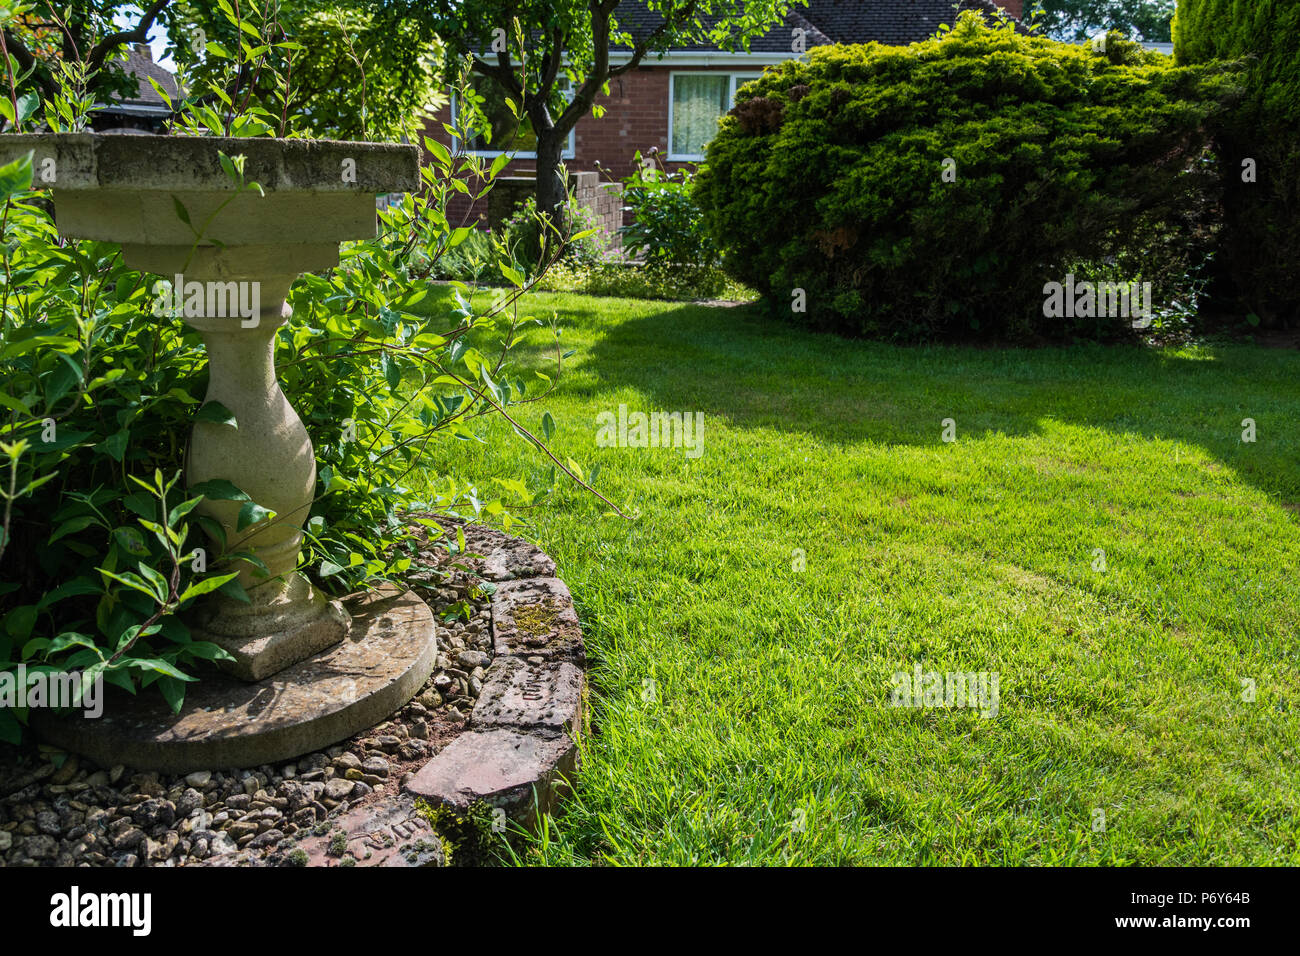 A birdbath in a lovely English country garden on a warm sunny day. Stock Photo